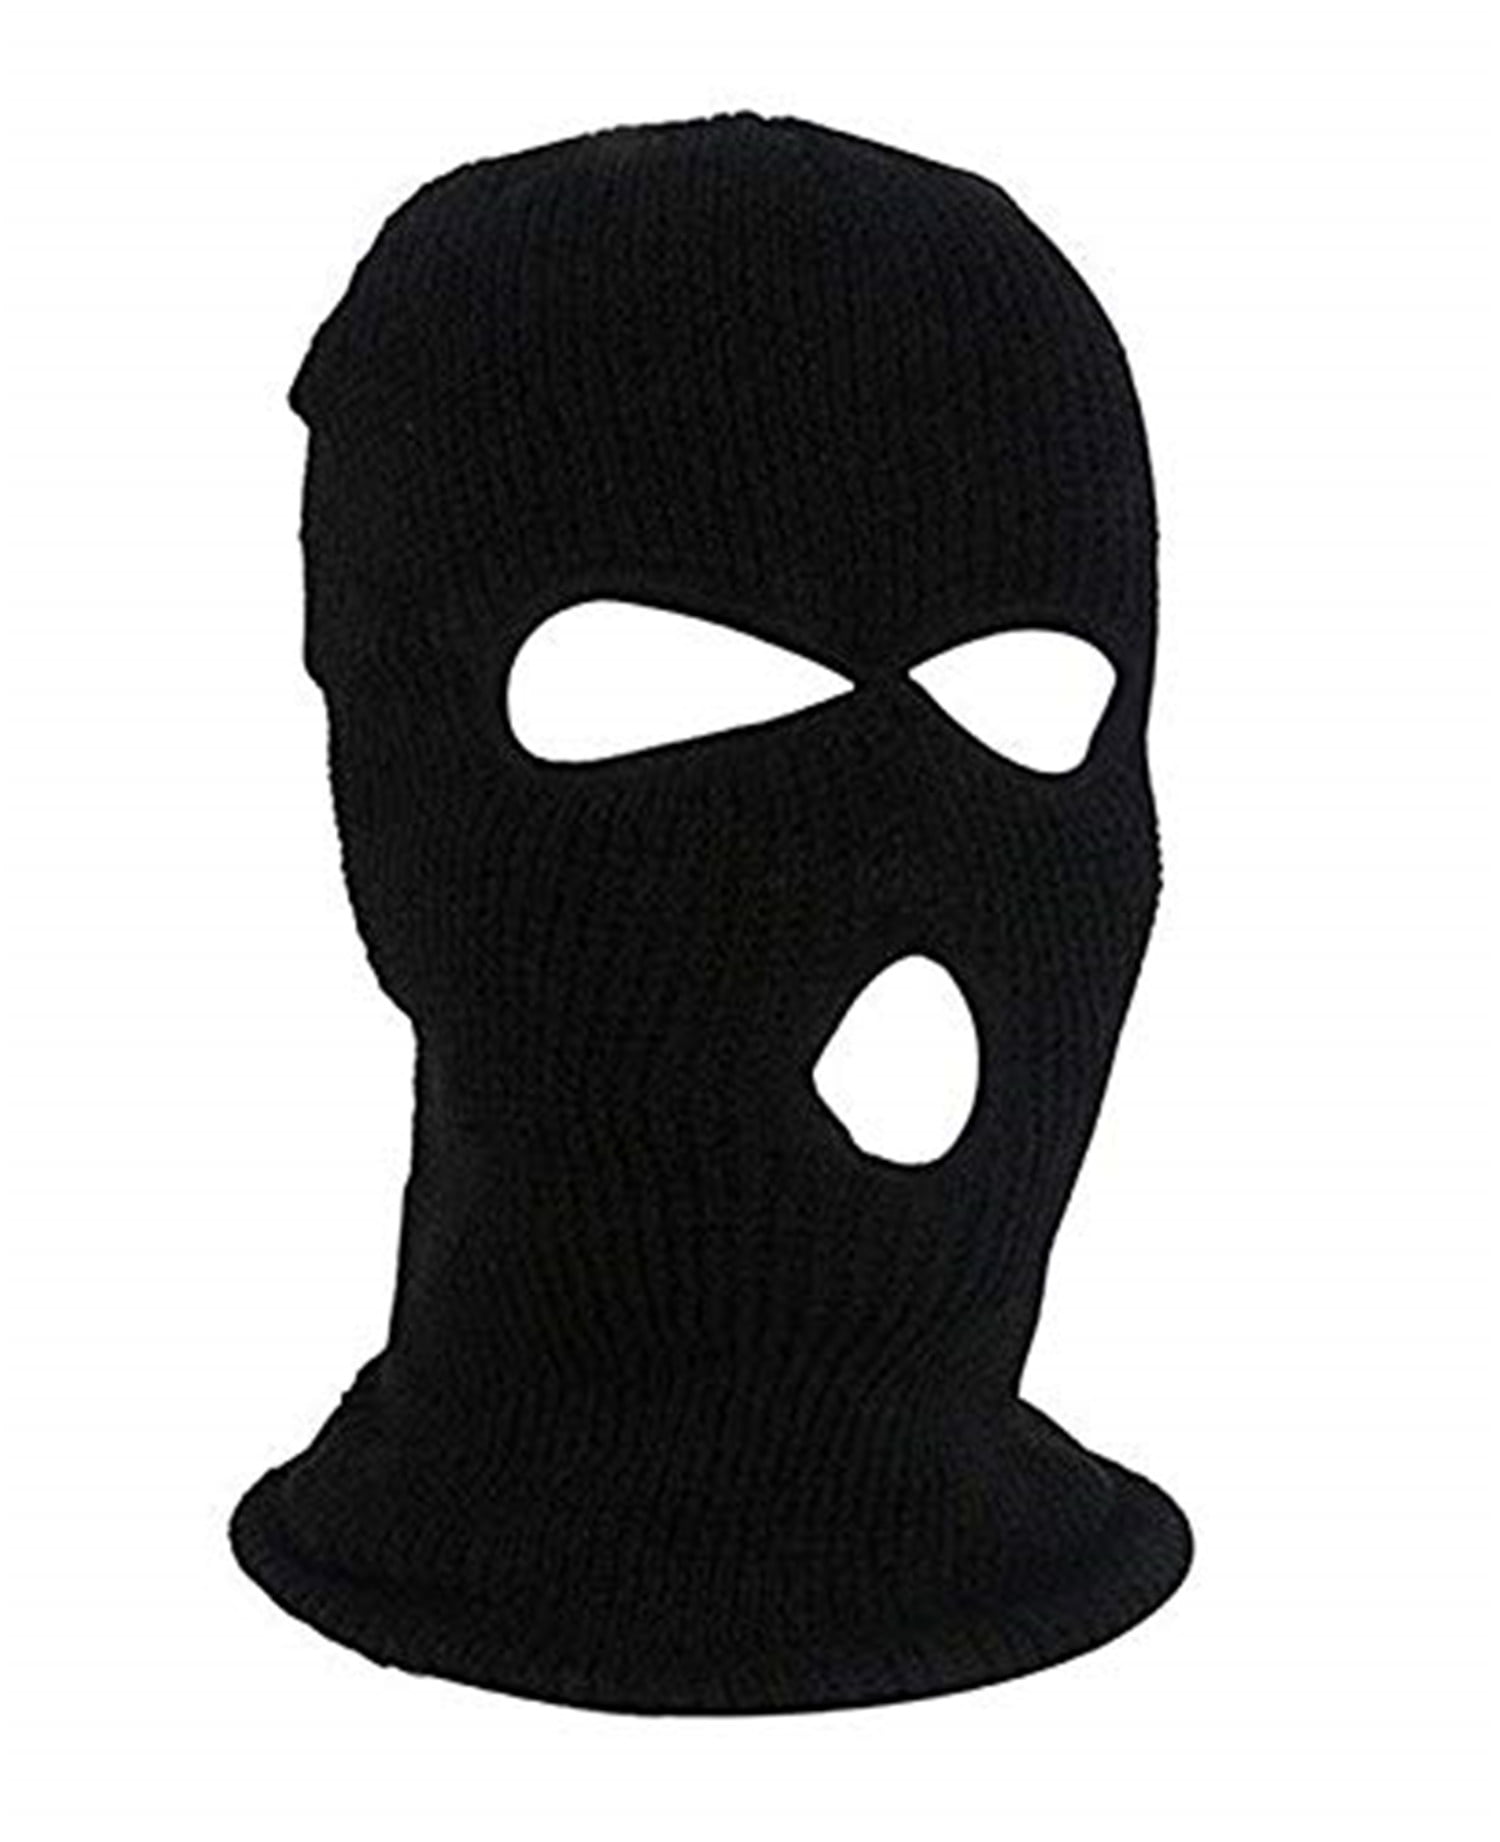 3 Hole Ski Mask Black Knit Hat Face Shield Beanie Cap Snow Winter Warm Warmer 